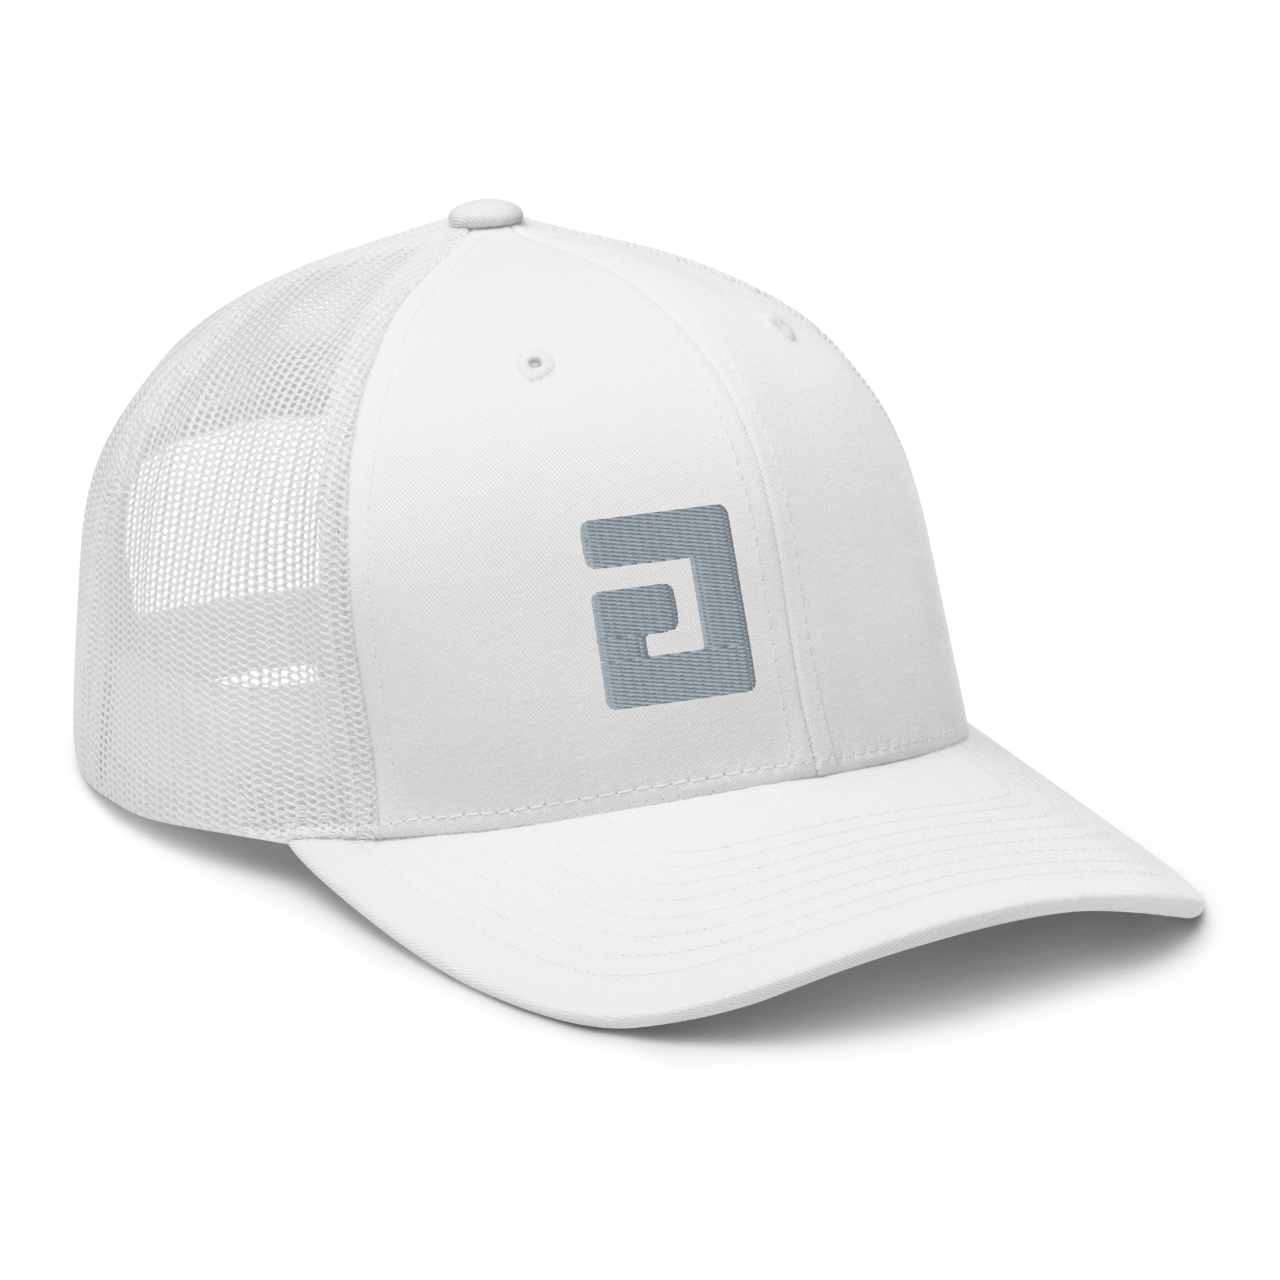 axsgtr axess electronics guitar music industry branded merchandise swag trucker cap hat white grey